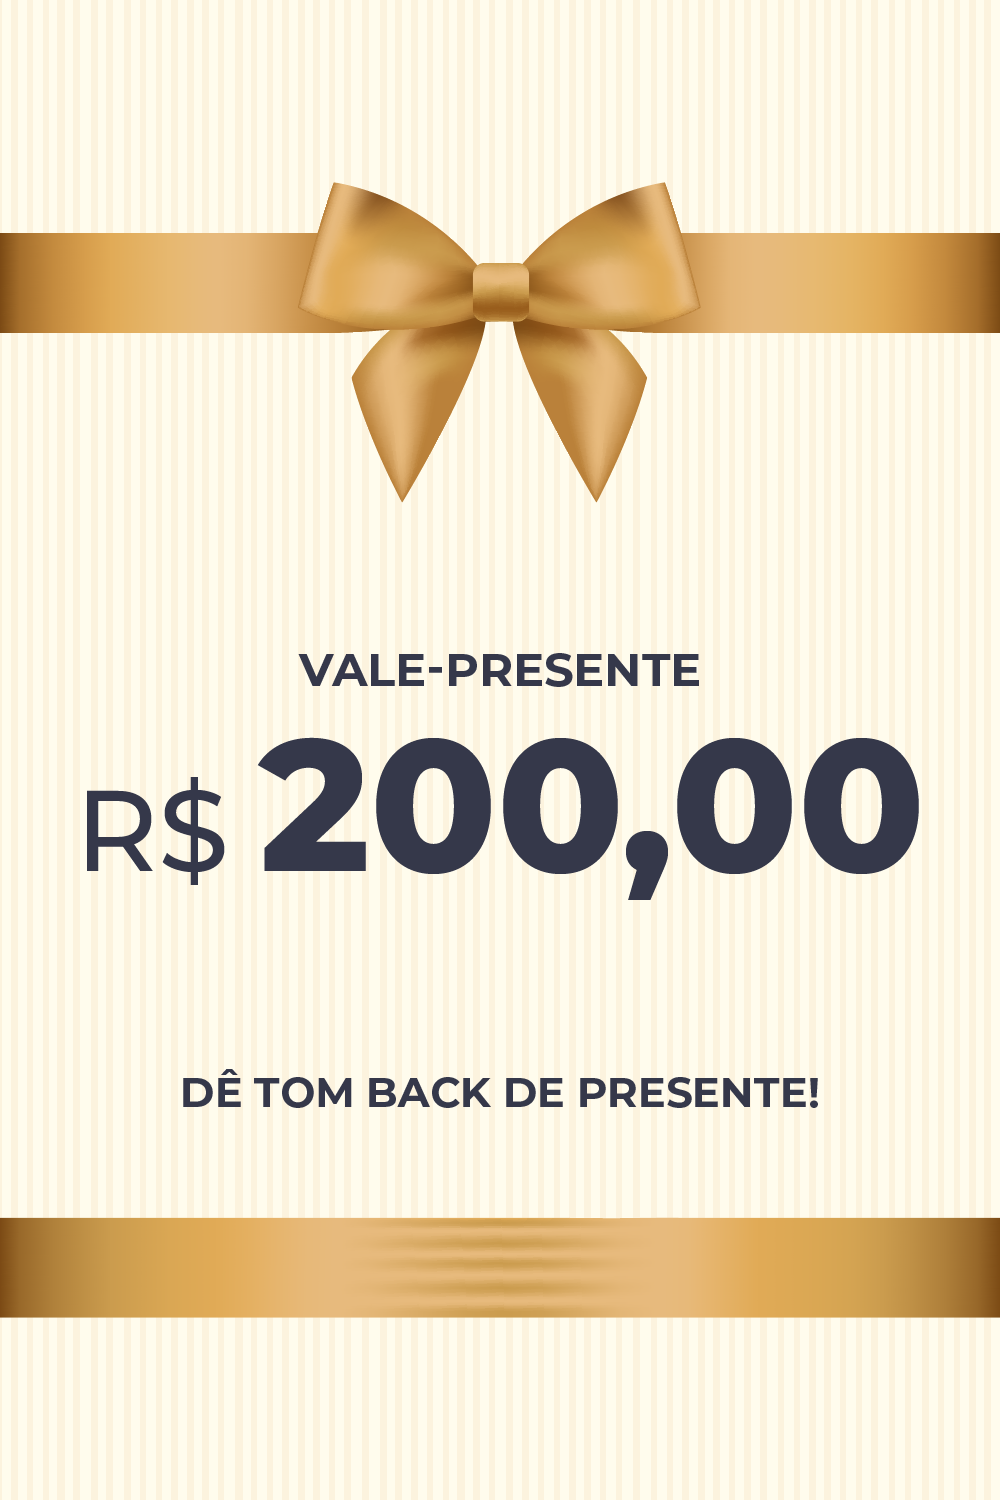 Vale Presente R$ 200,00